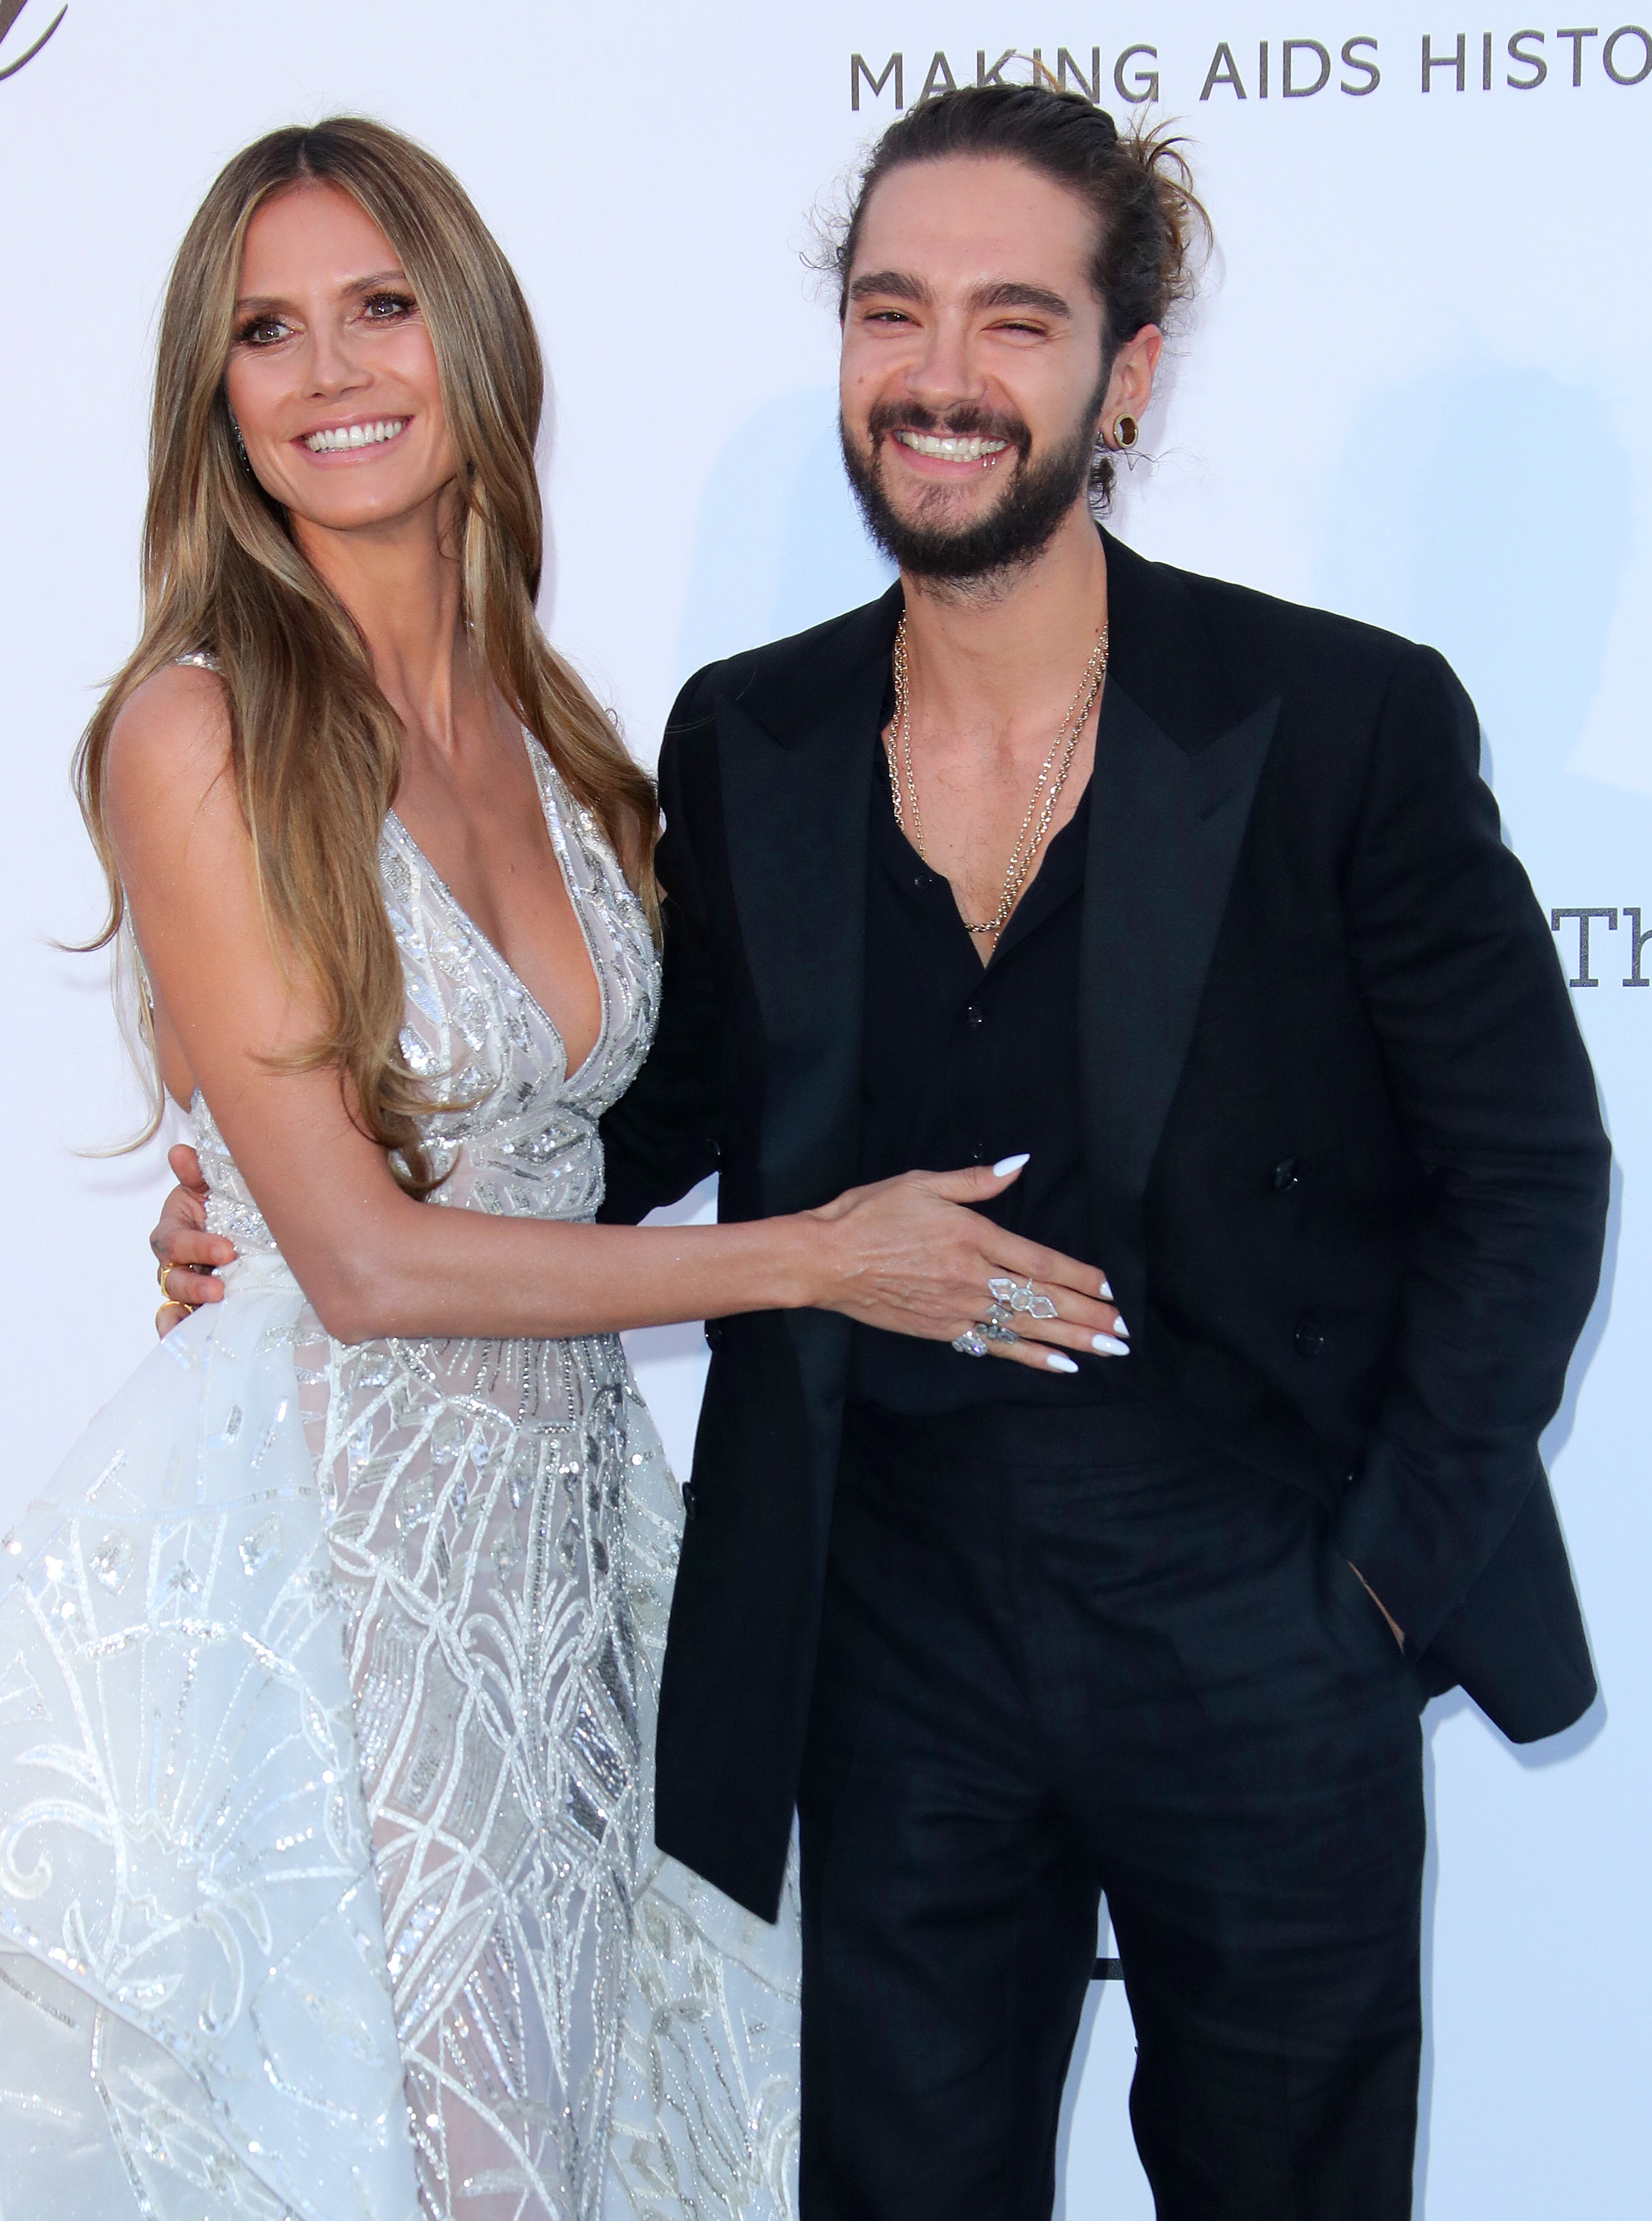 Heidi Klum and Husband Tom Kaulitz's Love Story Marriage Details